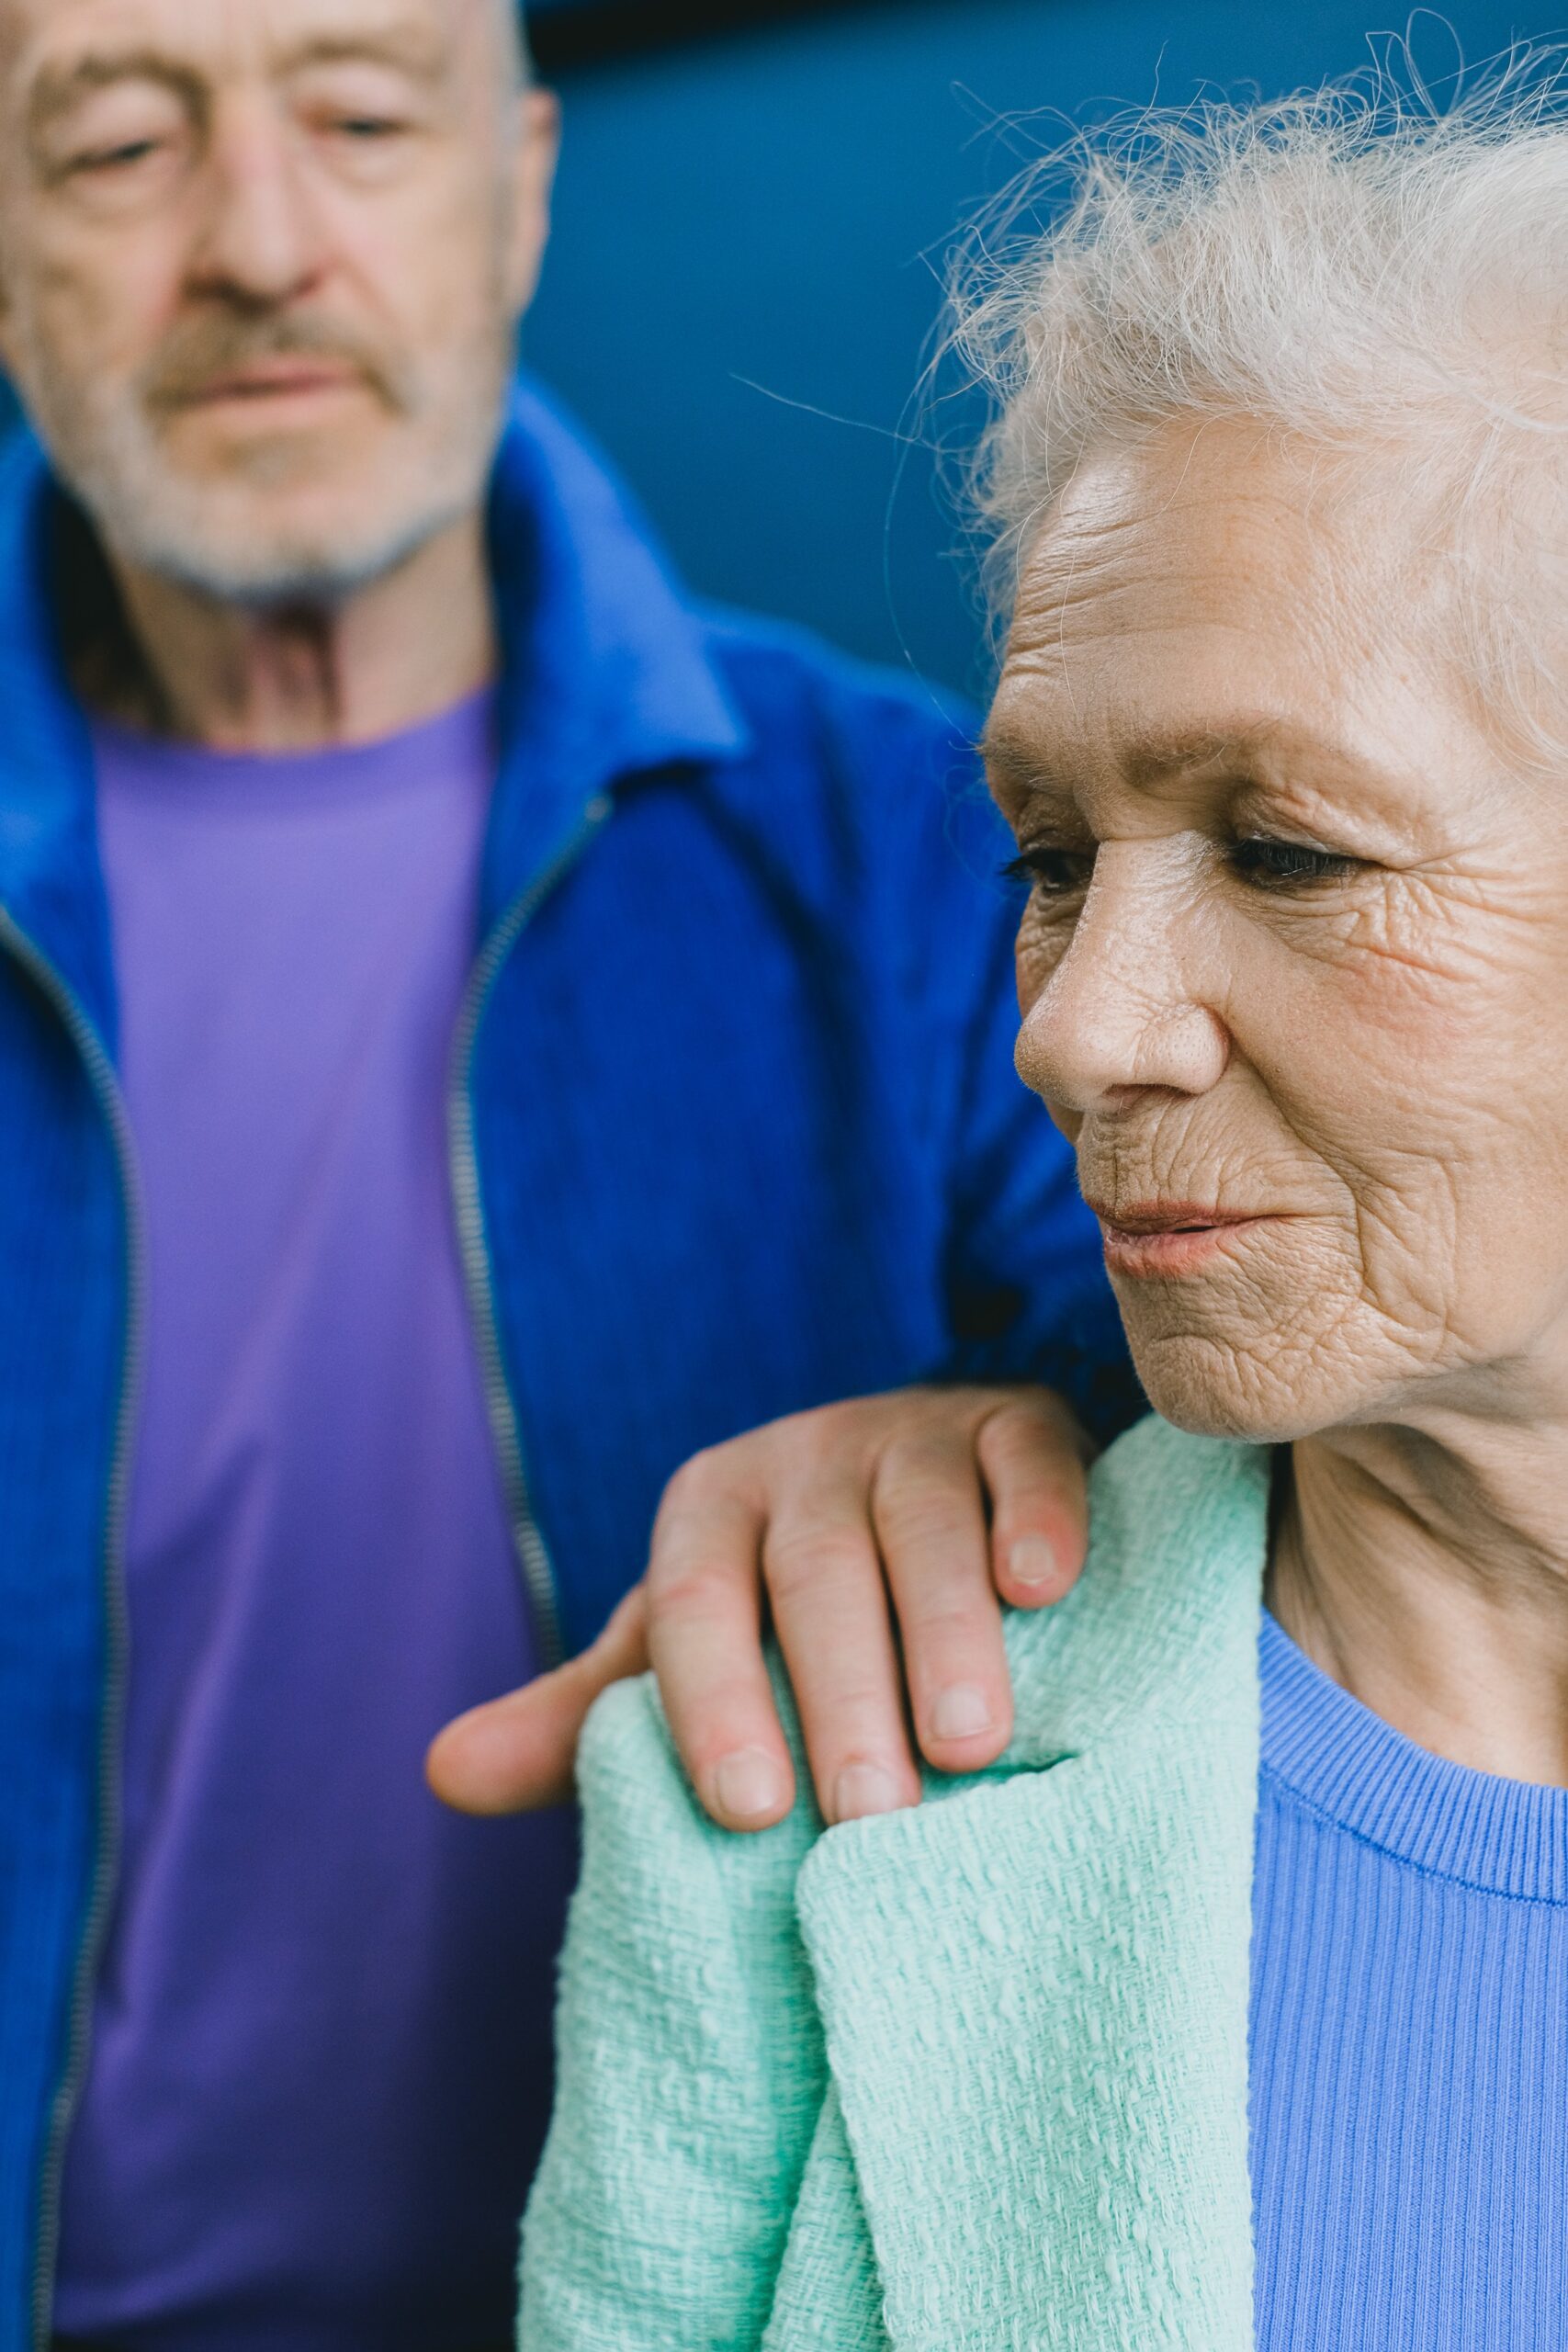 Elderly man with hand on shoulder of elderly woman